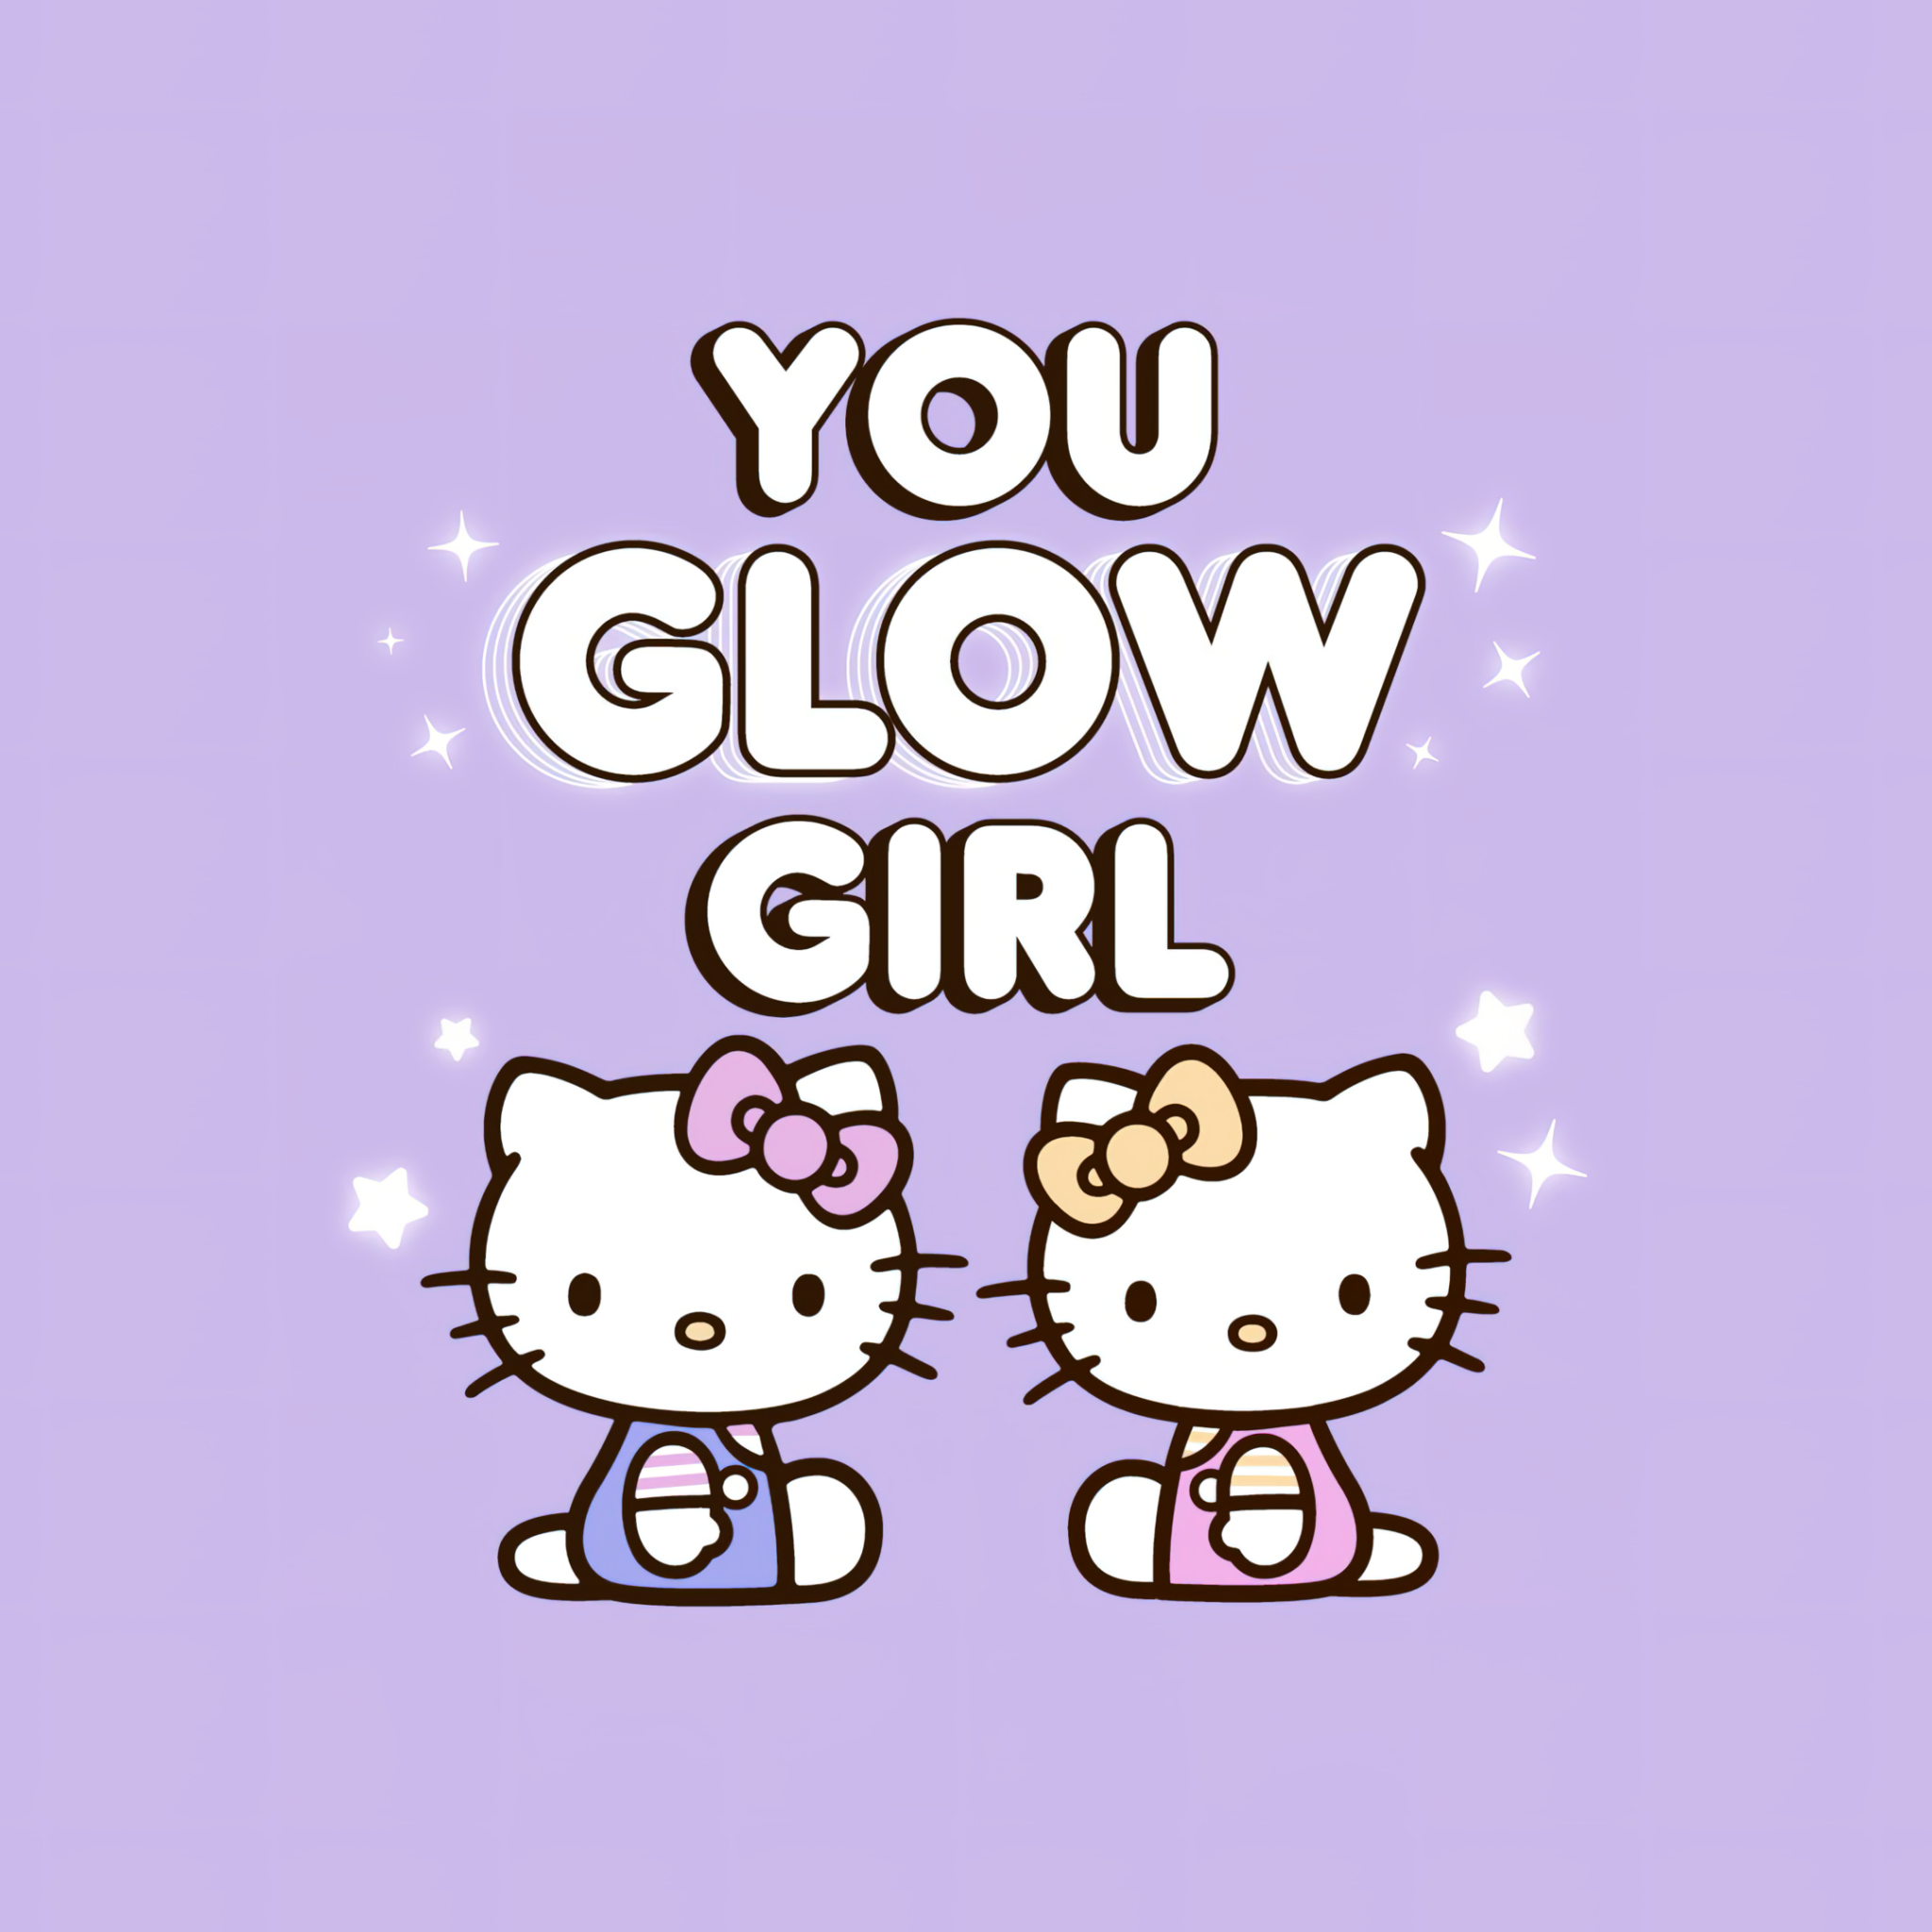 You glow girl Wallpaper 4K, Cute hello kitties, #9960